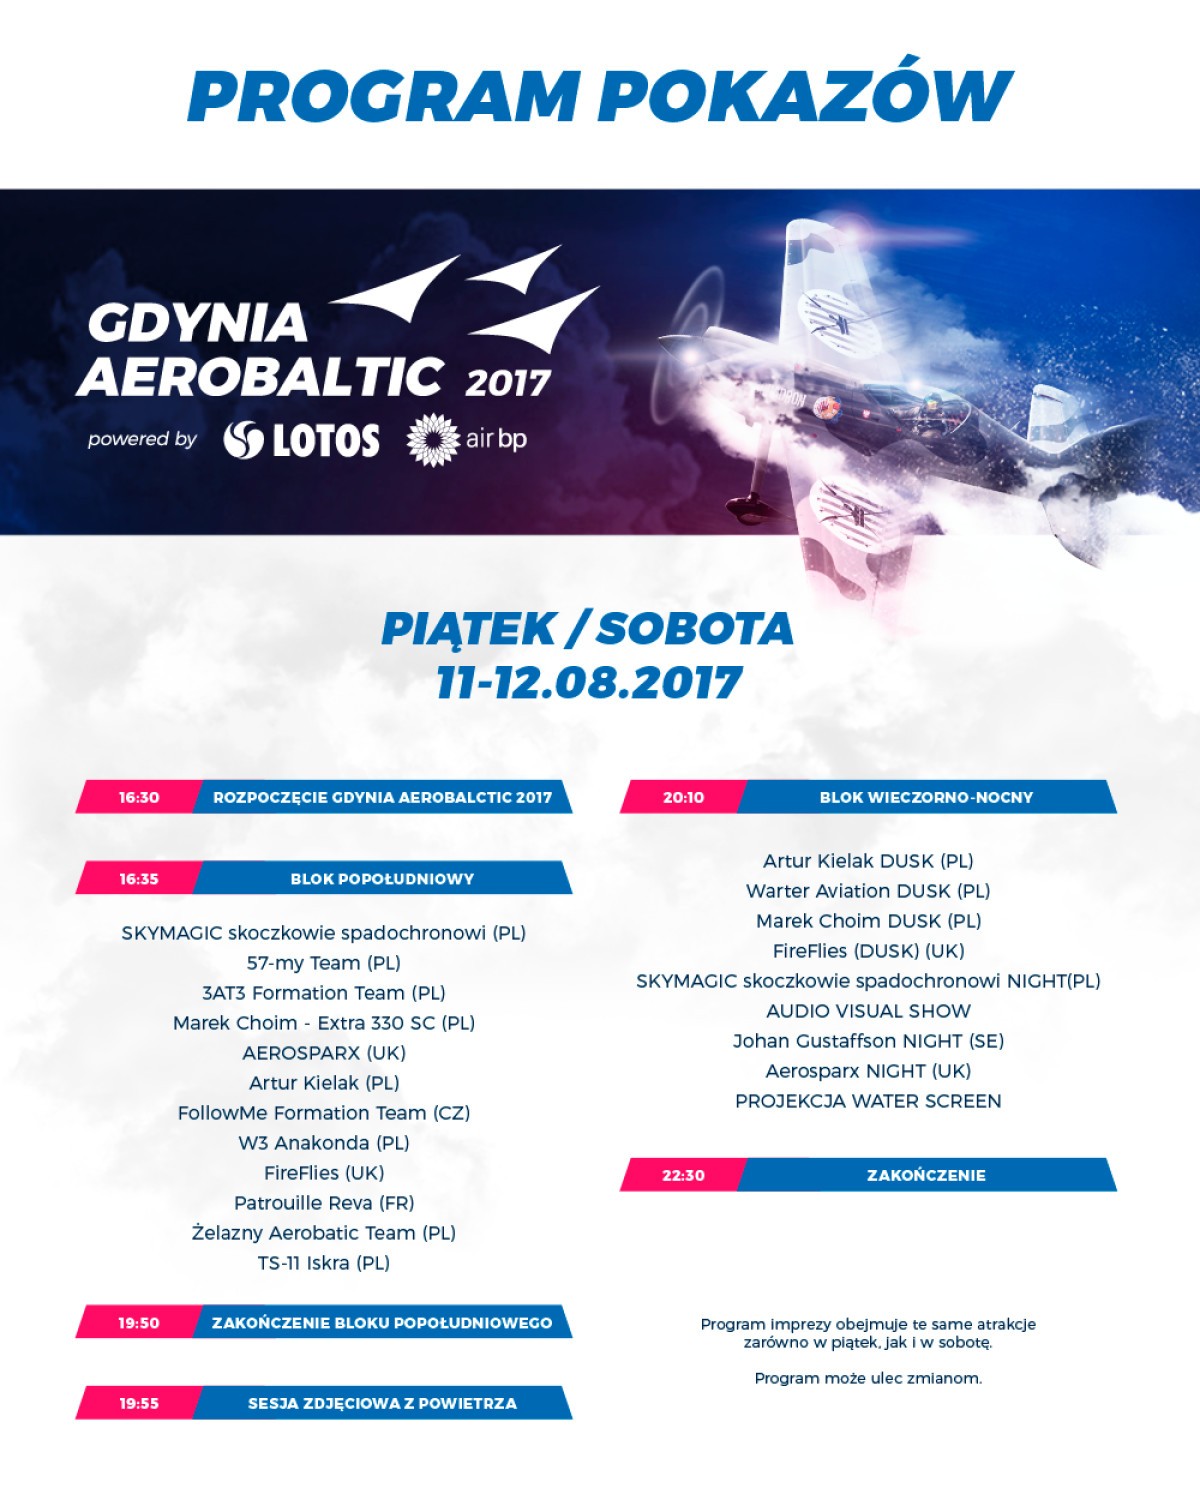 Gdynia Aerobaltic 2017 - PROGRAM